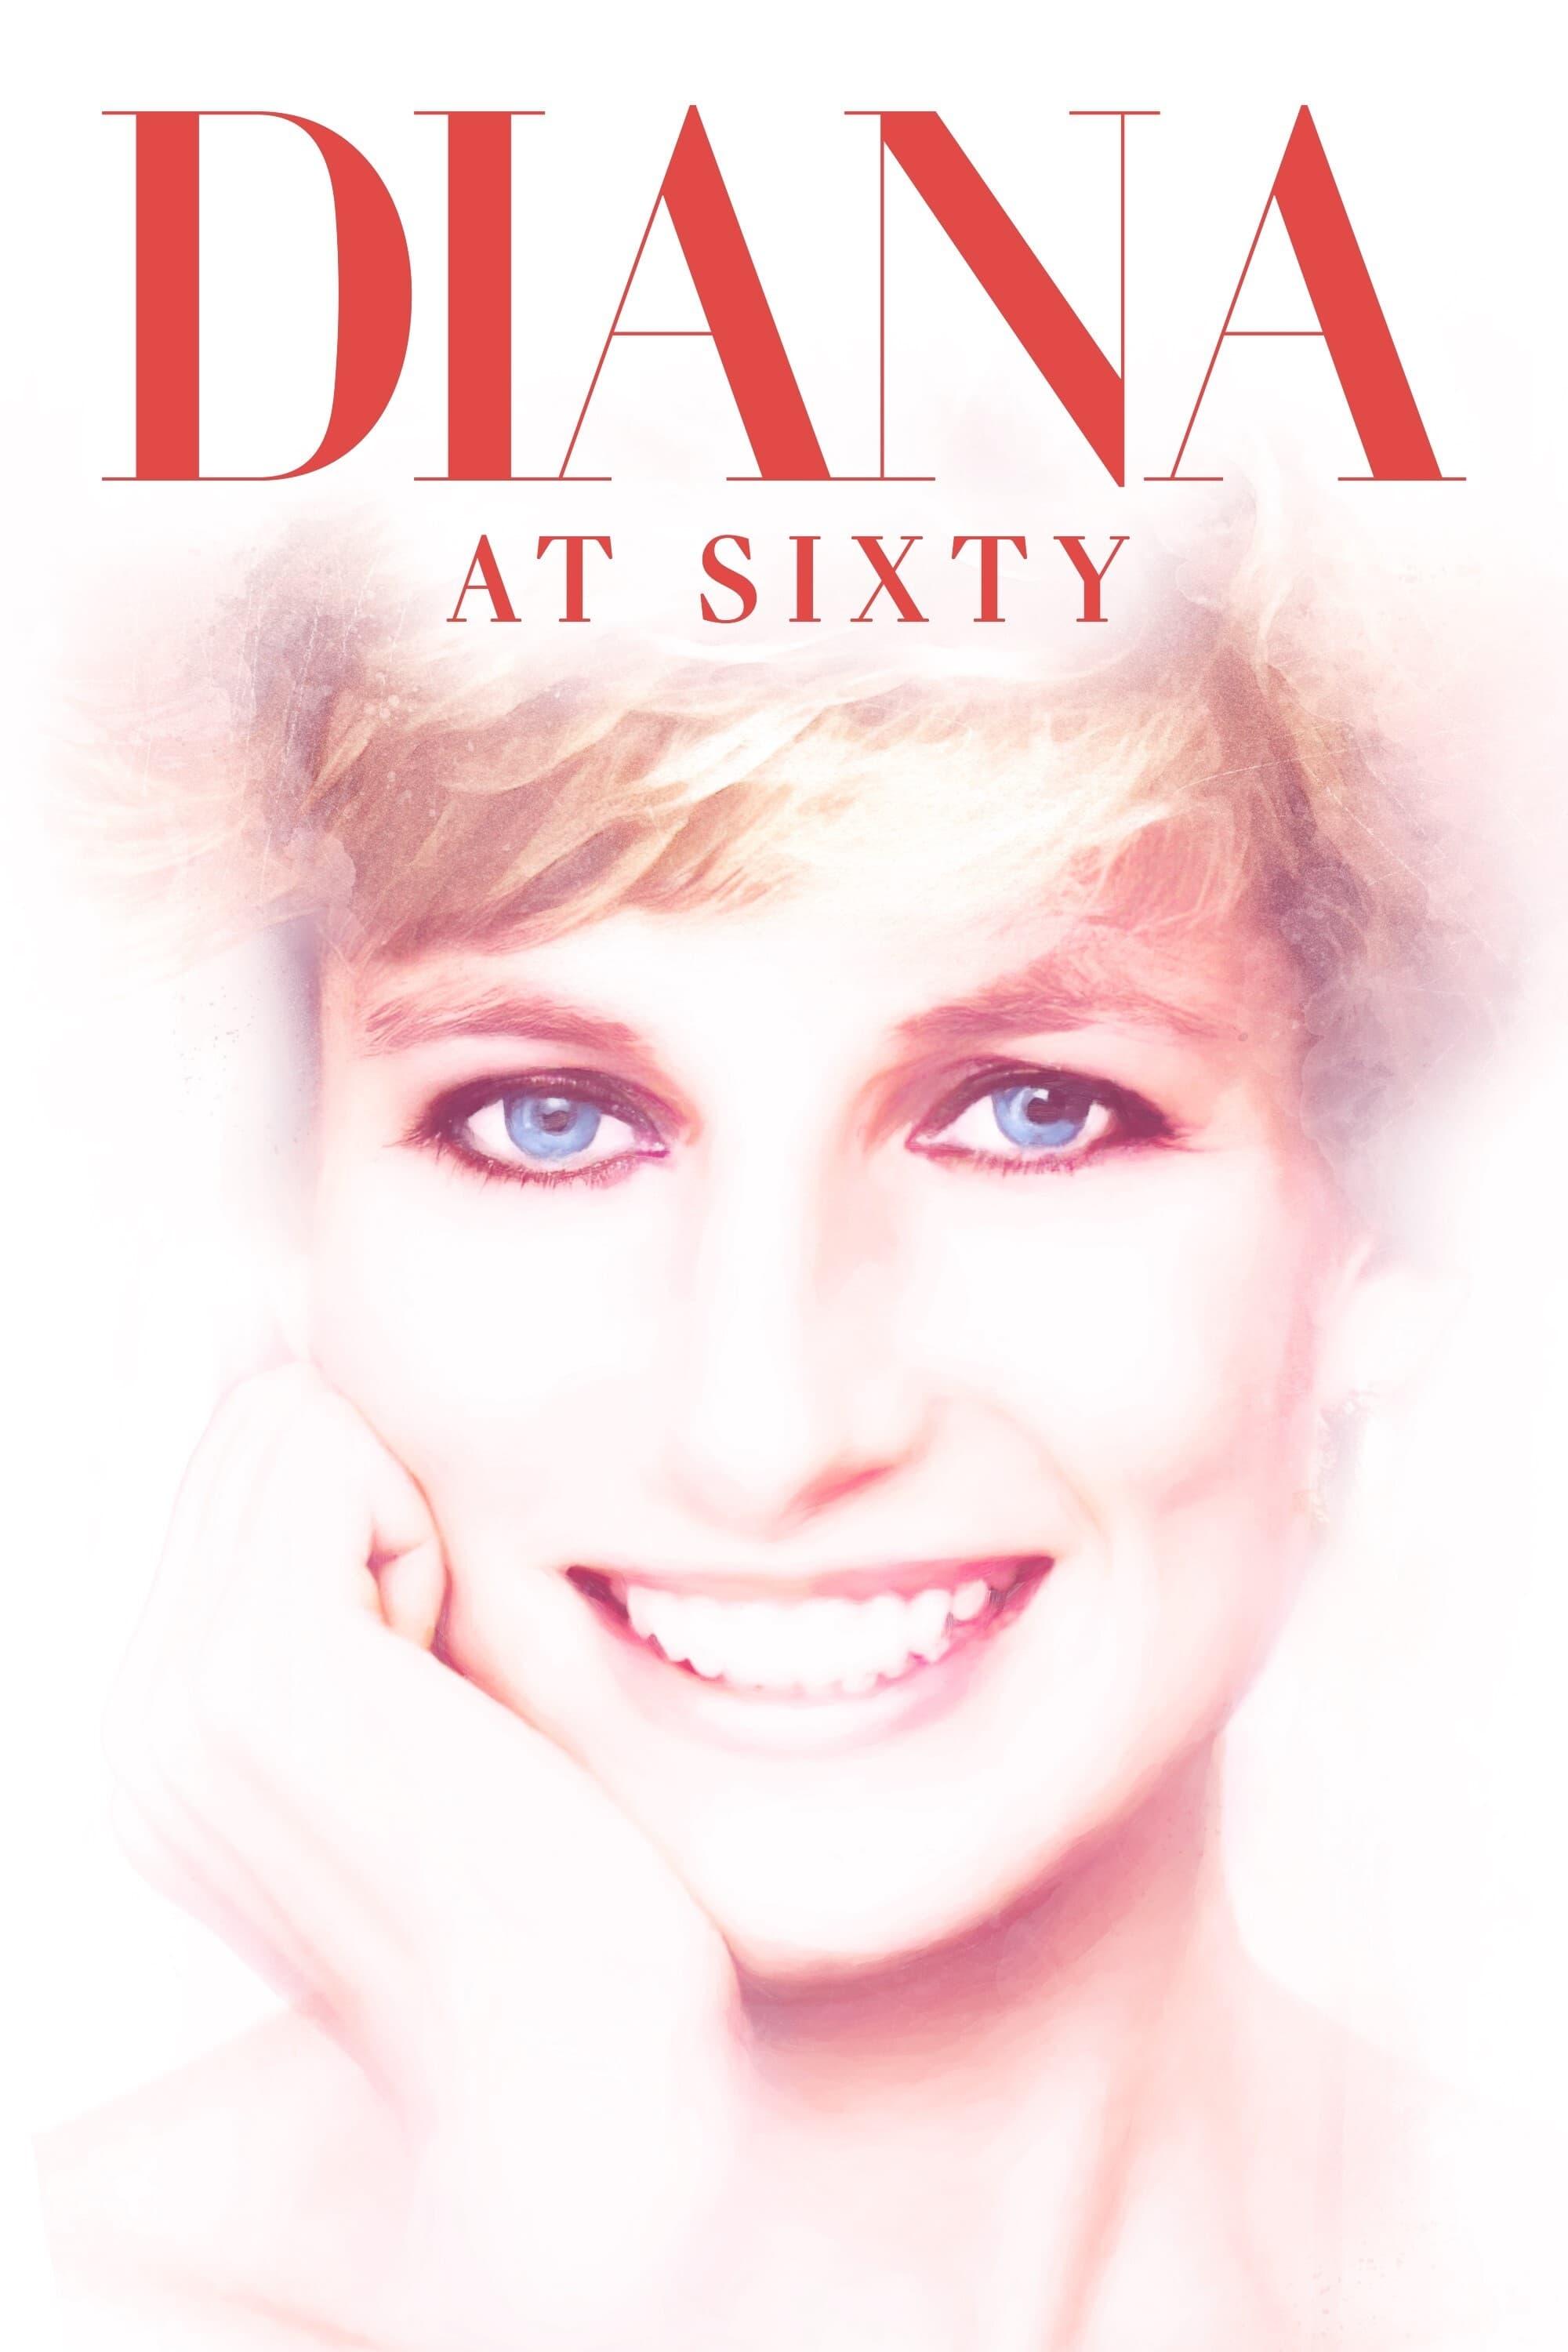 Diana at Sixty poster